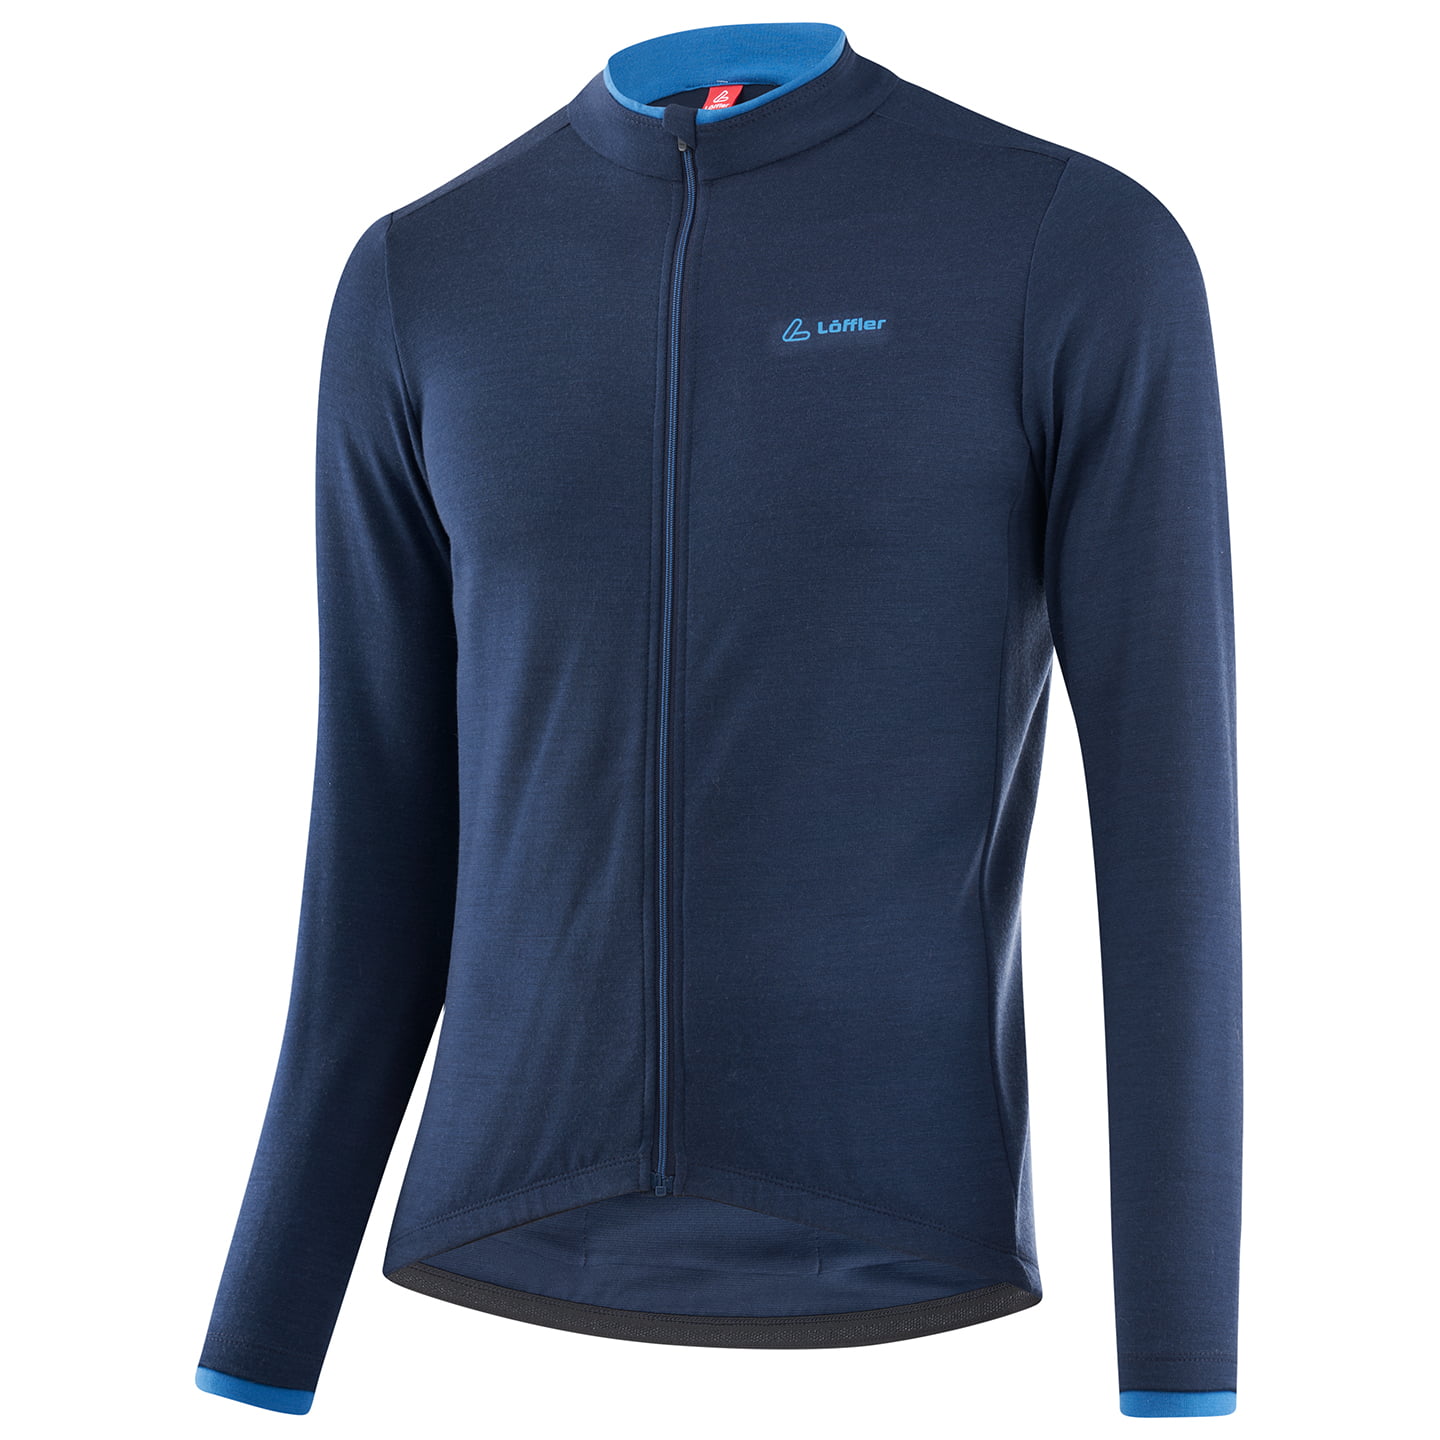 LOFFLER Merino long-sleeved jersey Long Sleeve Jersey, for men, size M, Cycling jersey, Cycling clothing